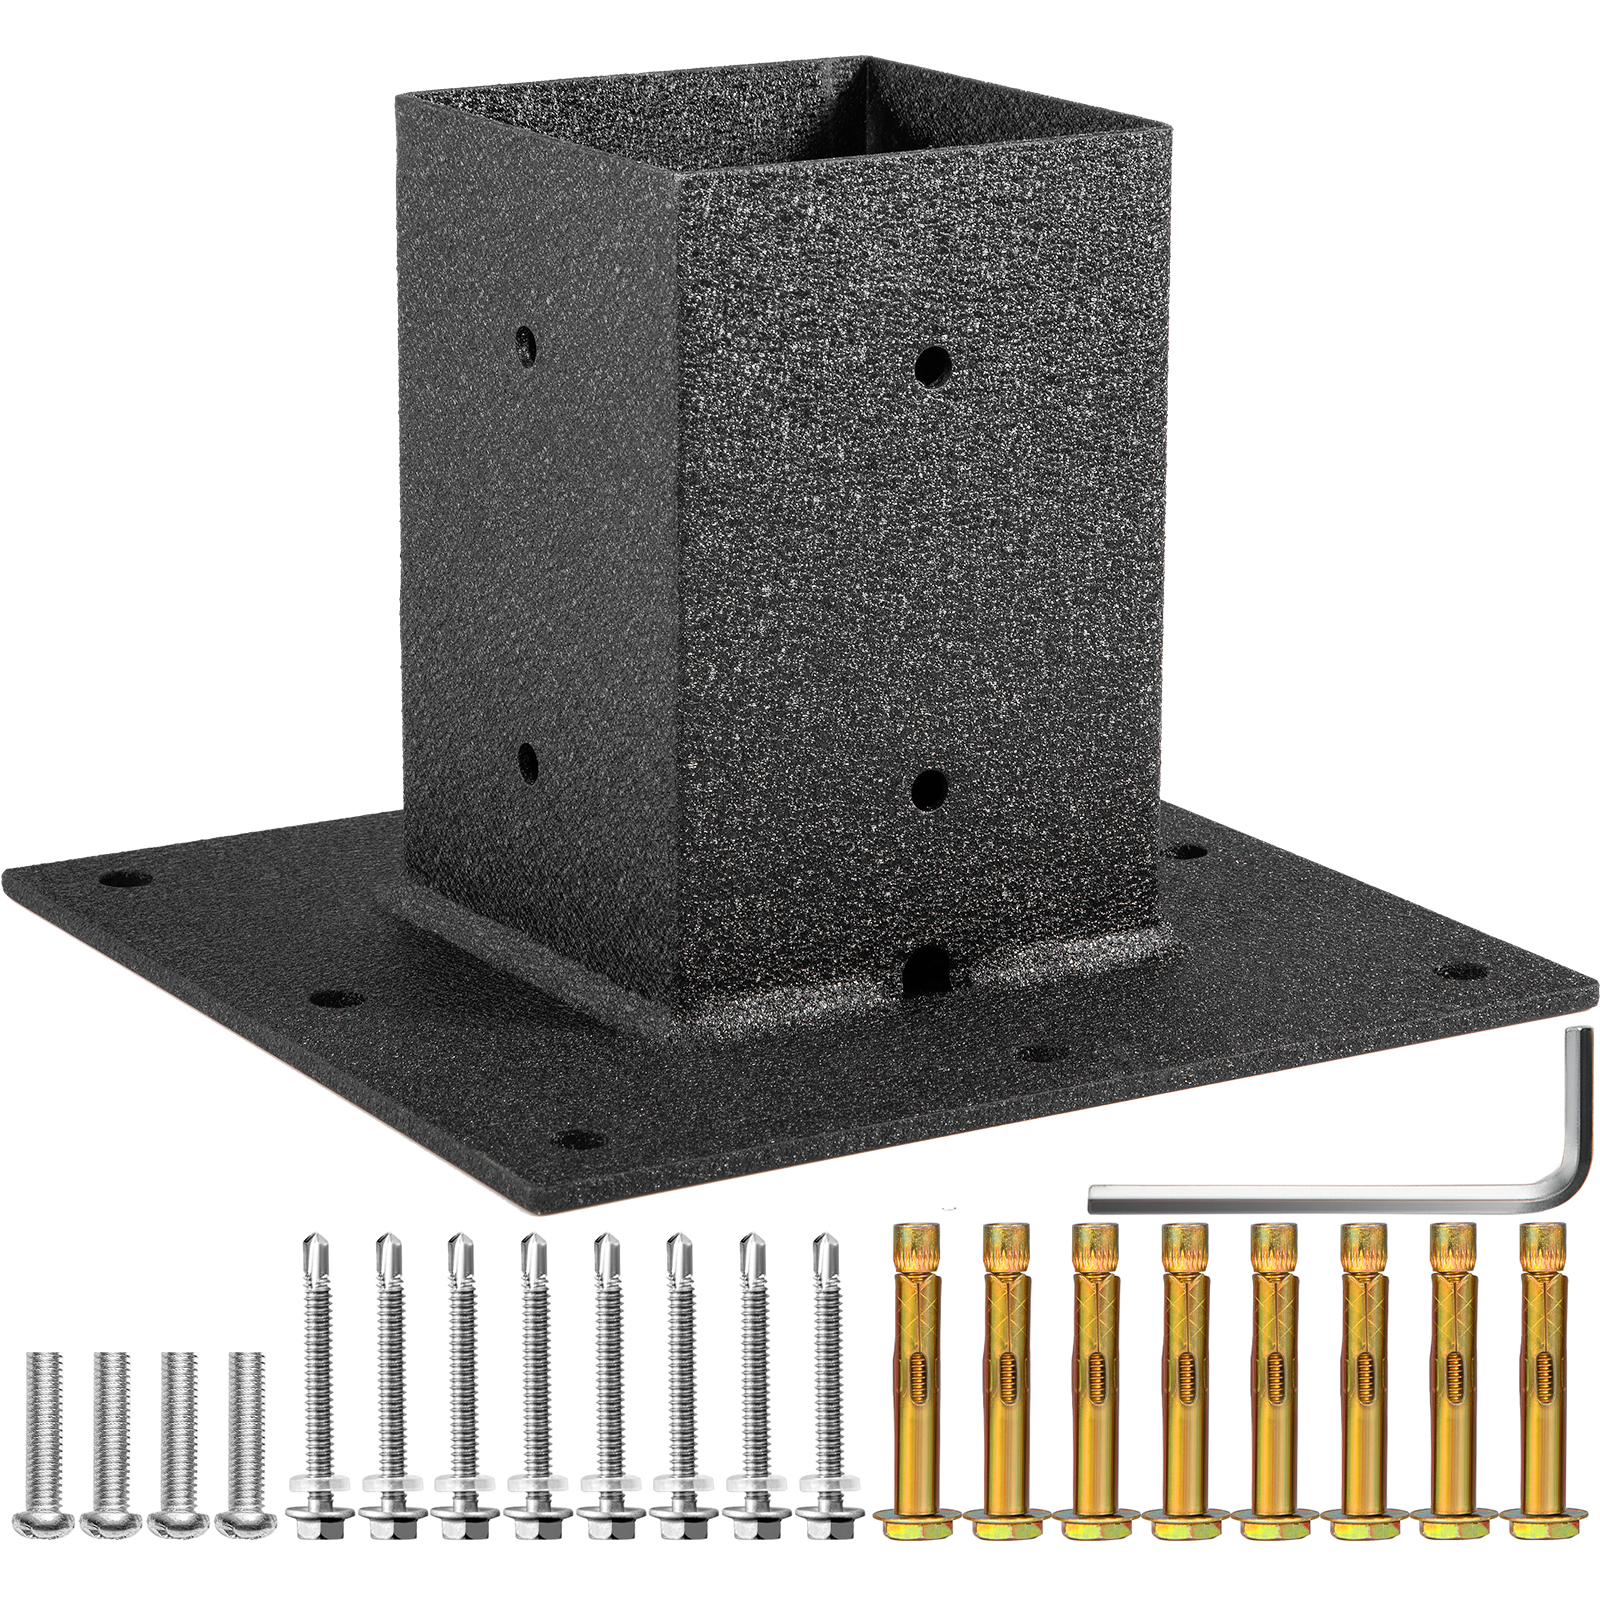 Vevor Post Base Mail Box Base Plate 4x4 Black Powder-coated Steel Surface Mount от Vevor Many GEOs